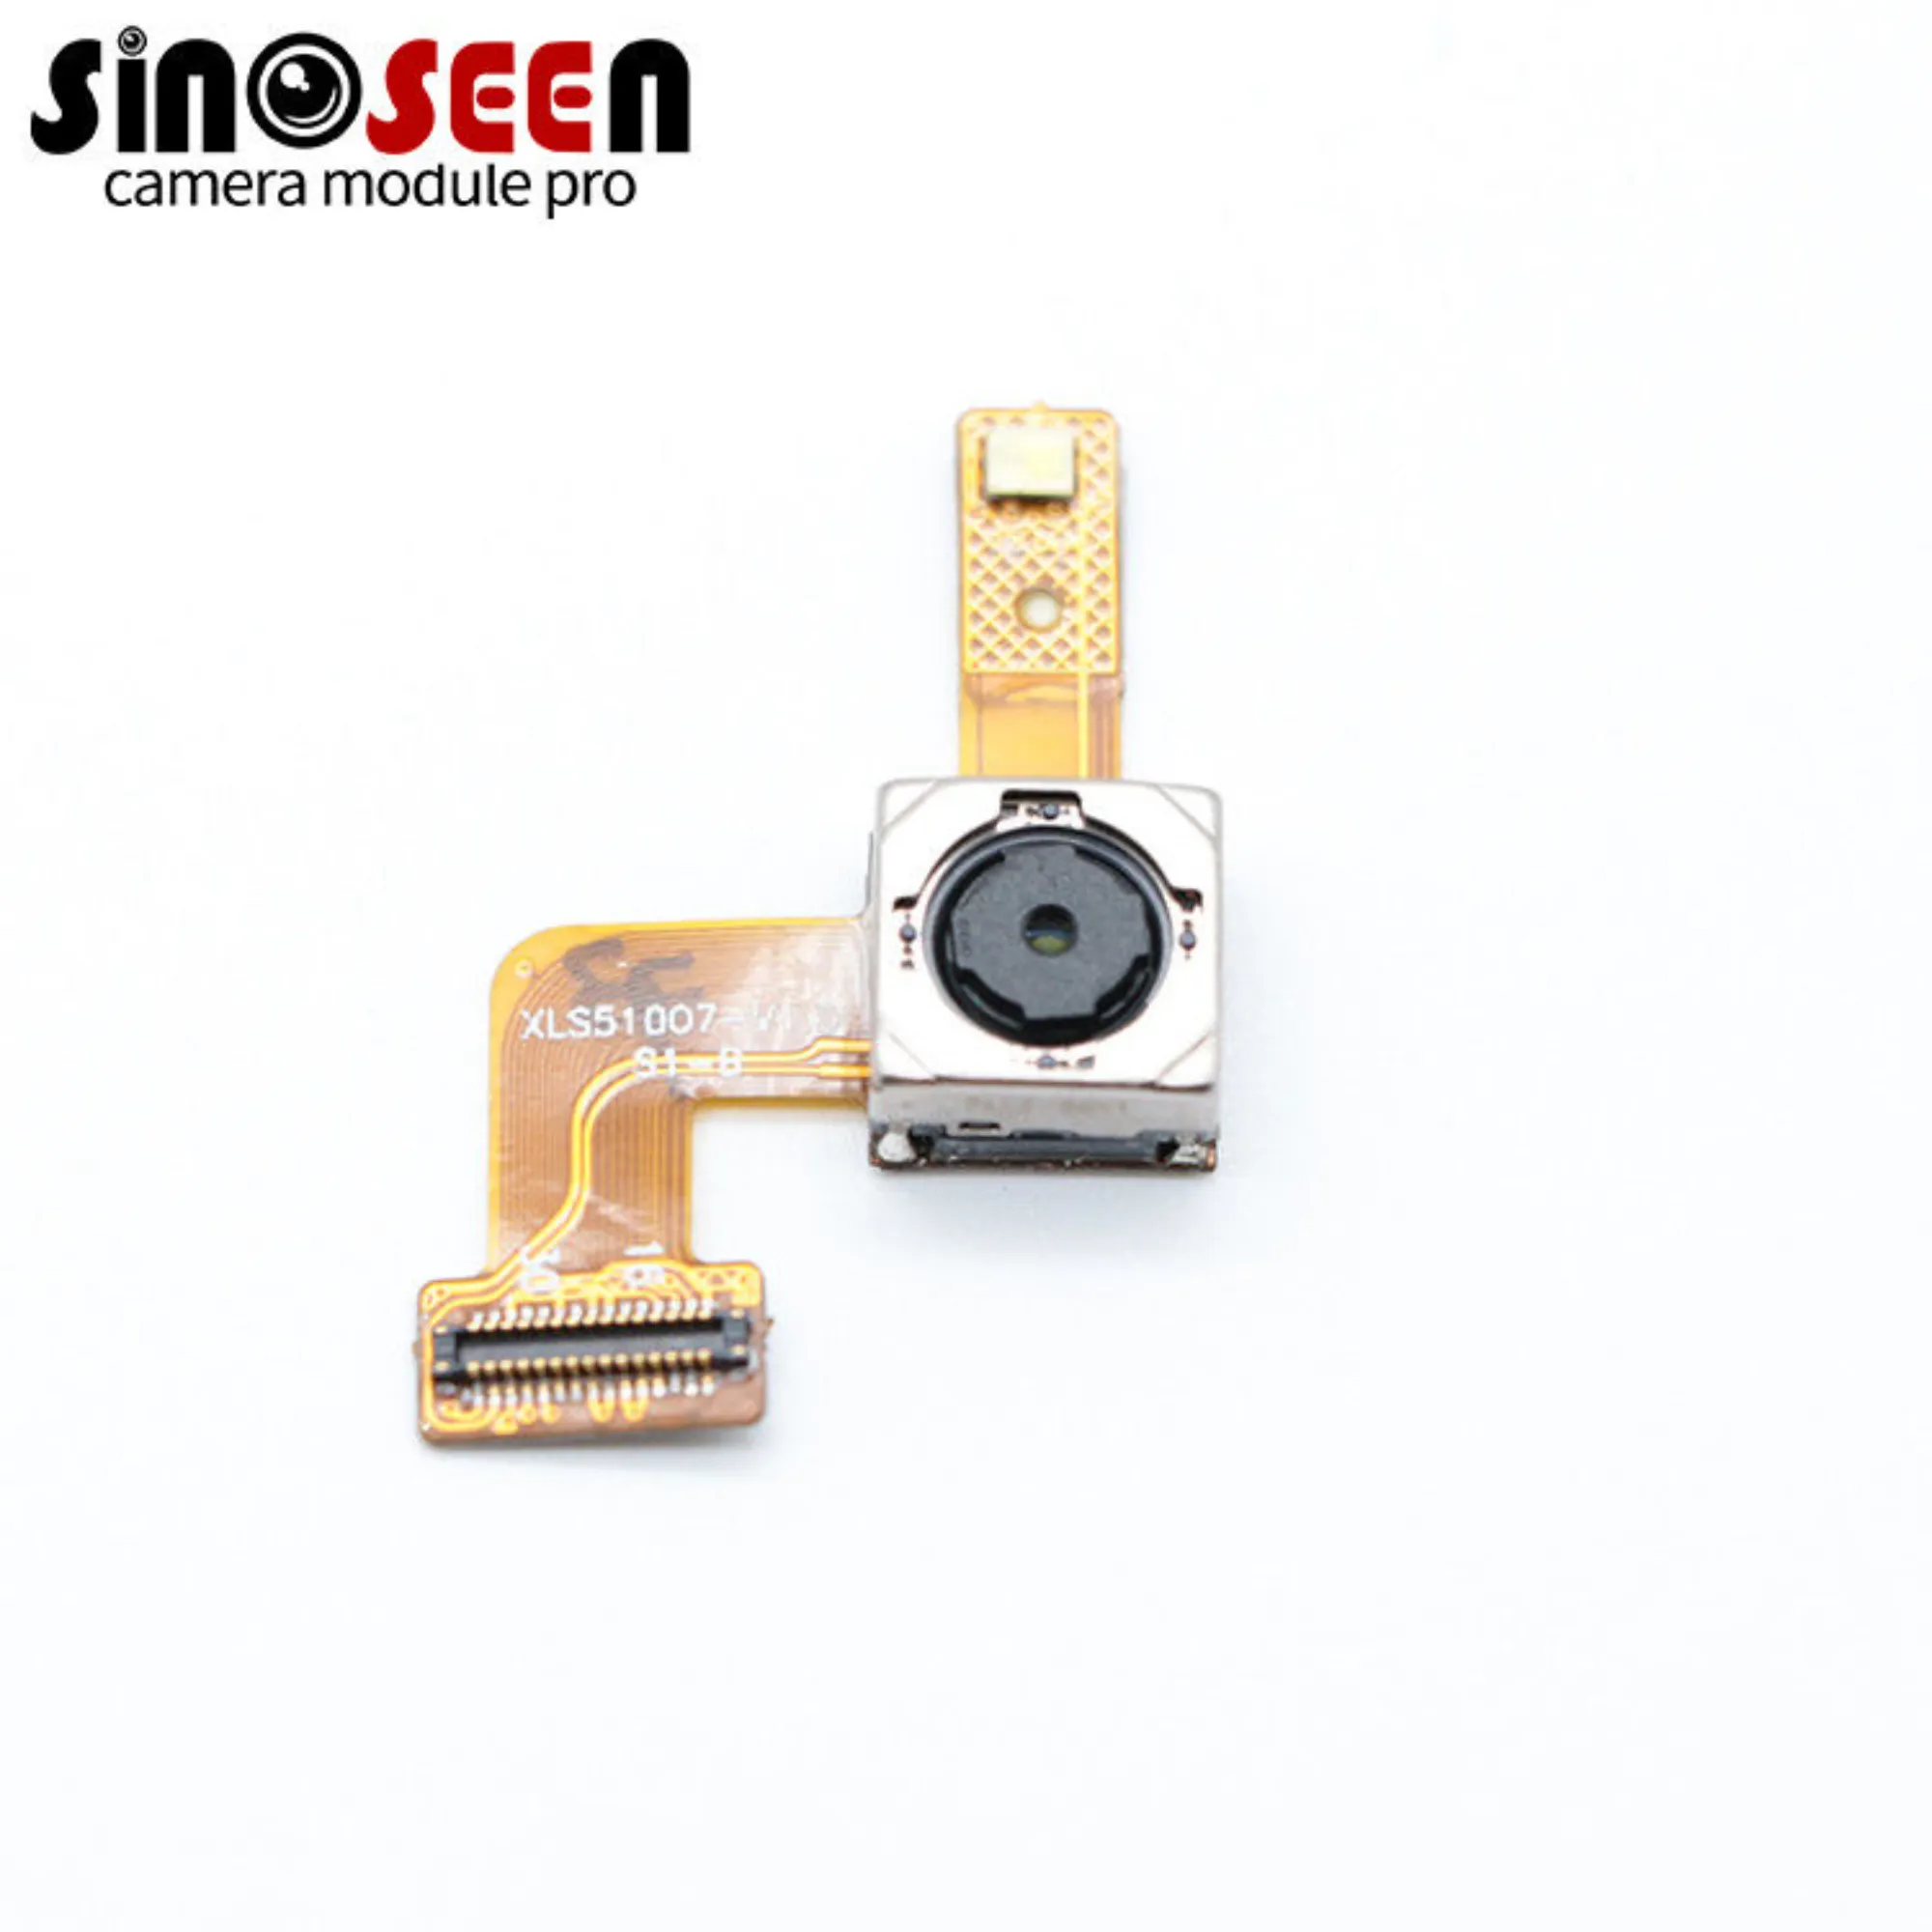 Customizable OV5648 5MP MIPI Camera Module With External Flash Light